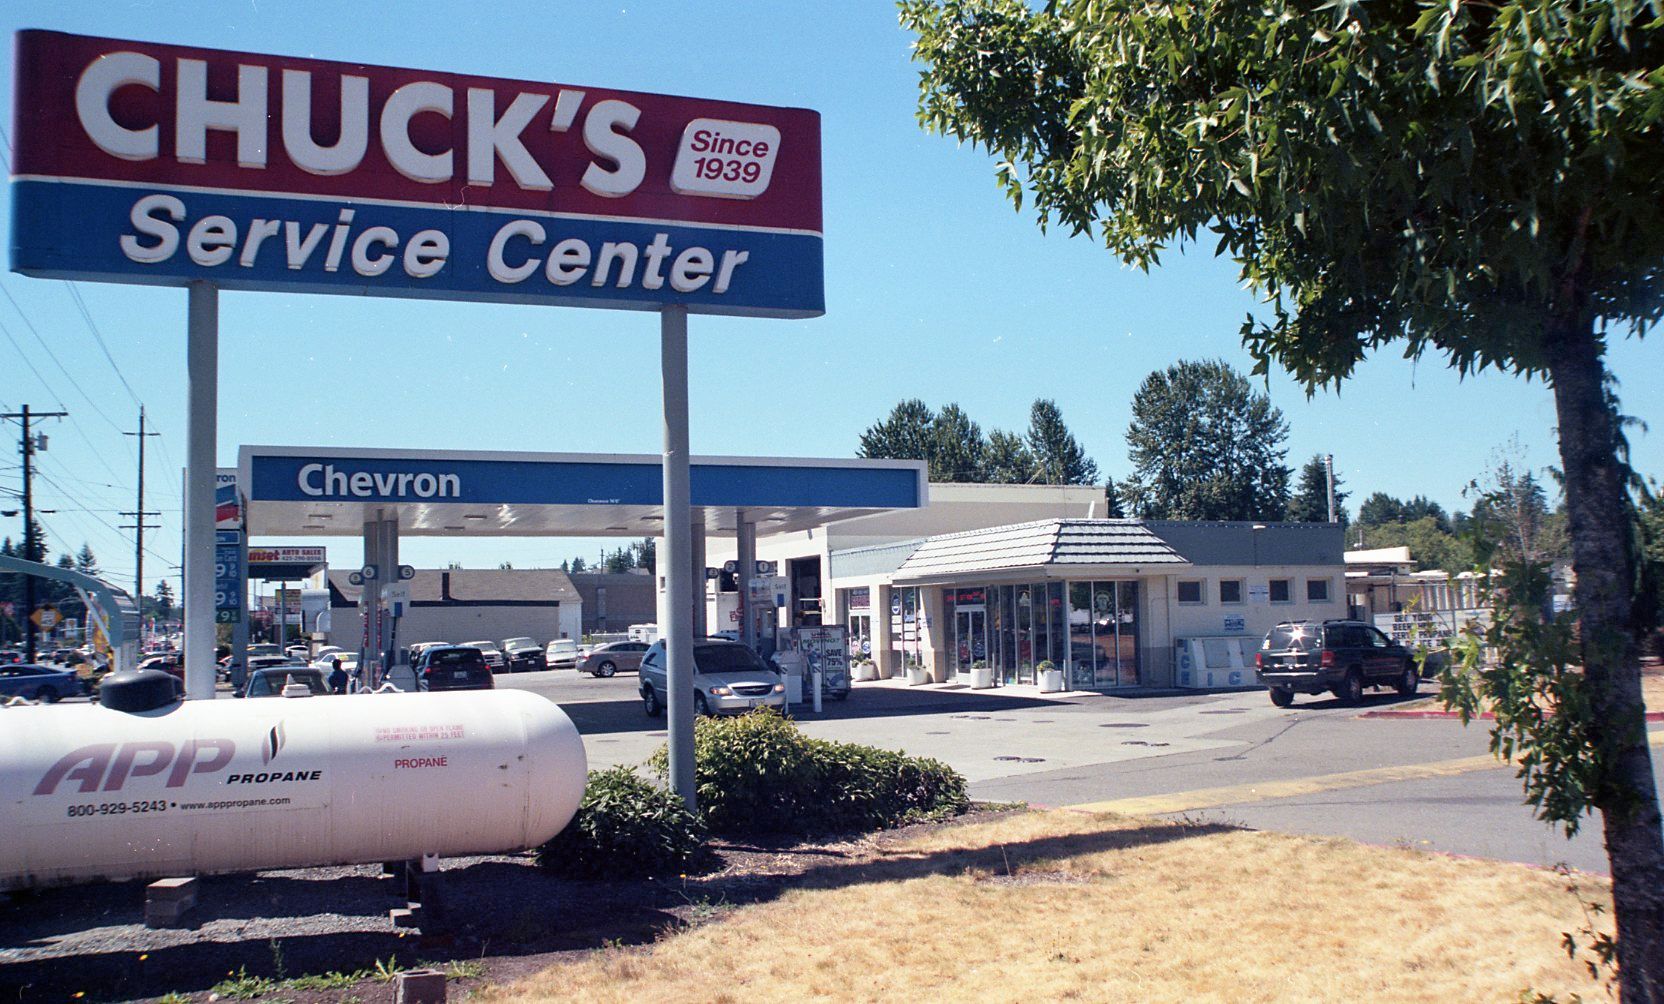 Services & Products Chuck's Chevron Services Center in Everett WA